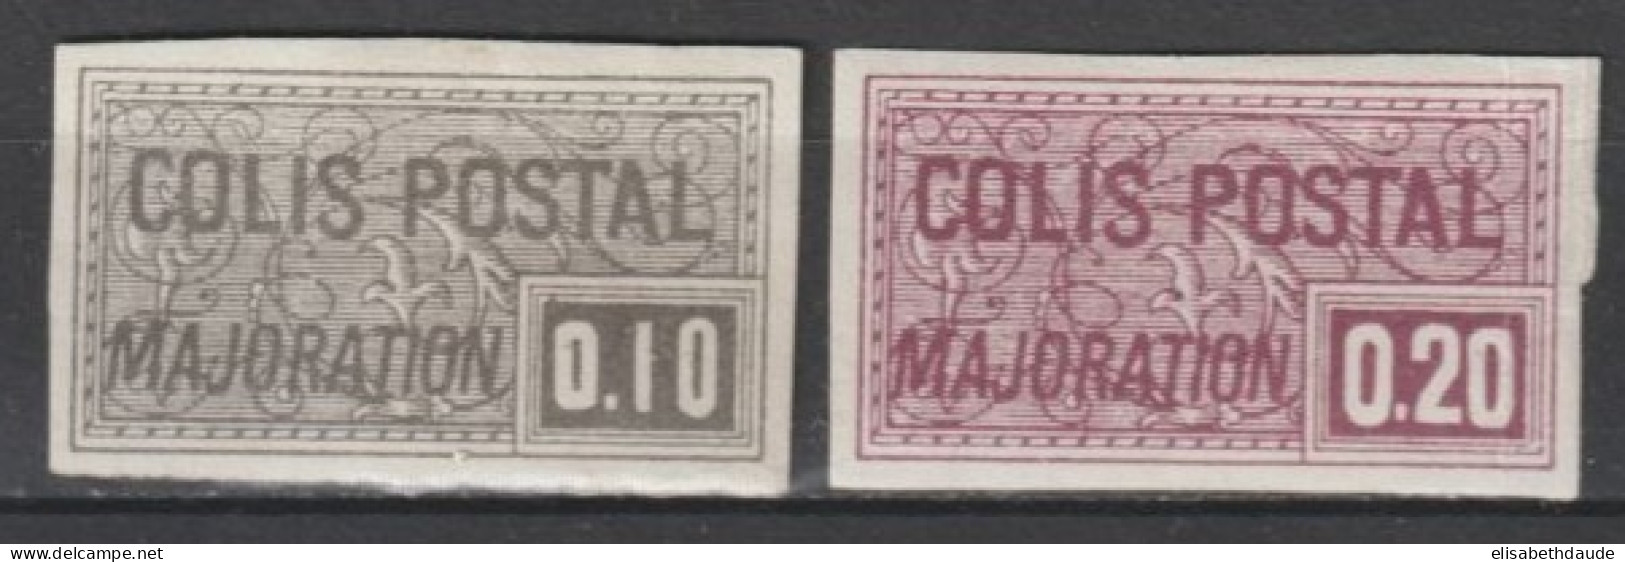 COLIS POSTAUX - 1938 - YVERT N° 155+158 VARIETE NON DENTELES ! * MH - COTE MAURY 2009 = 82 EUR. - Neufs